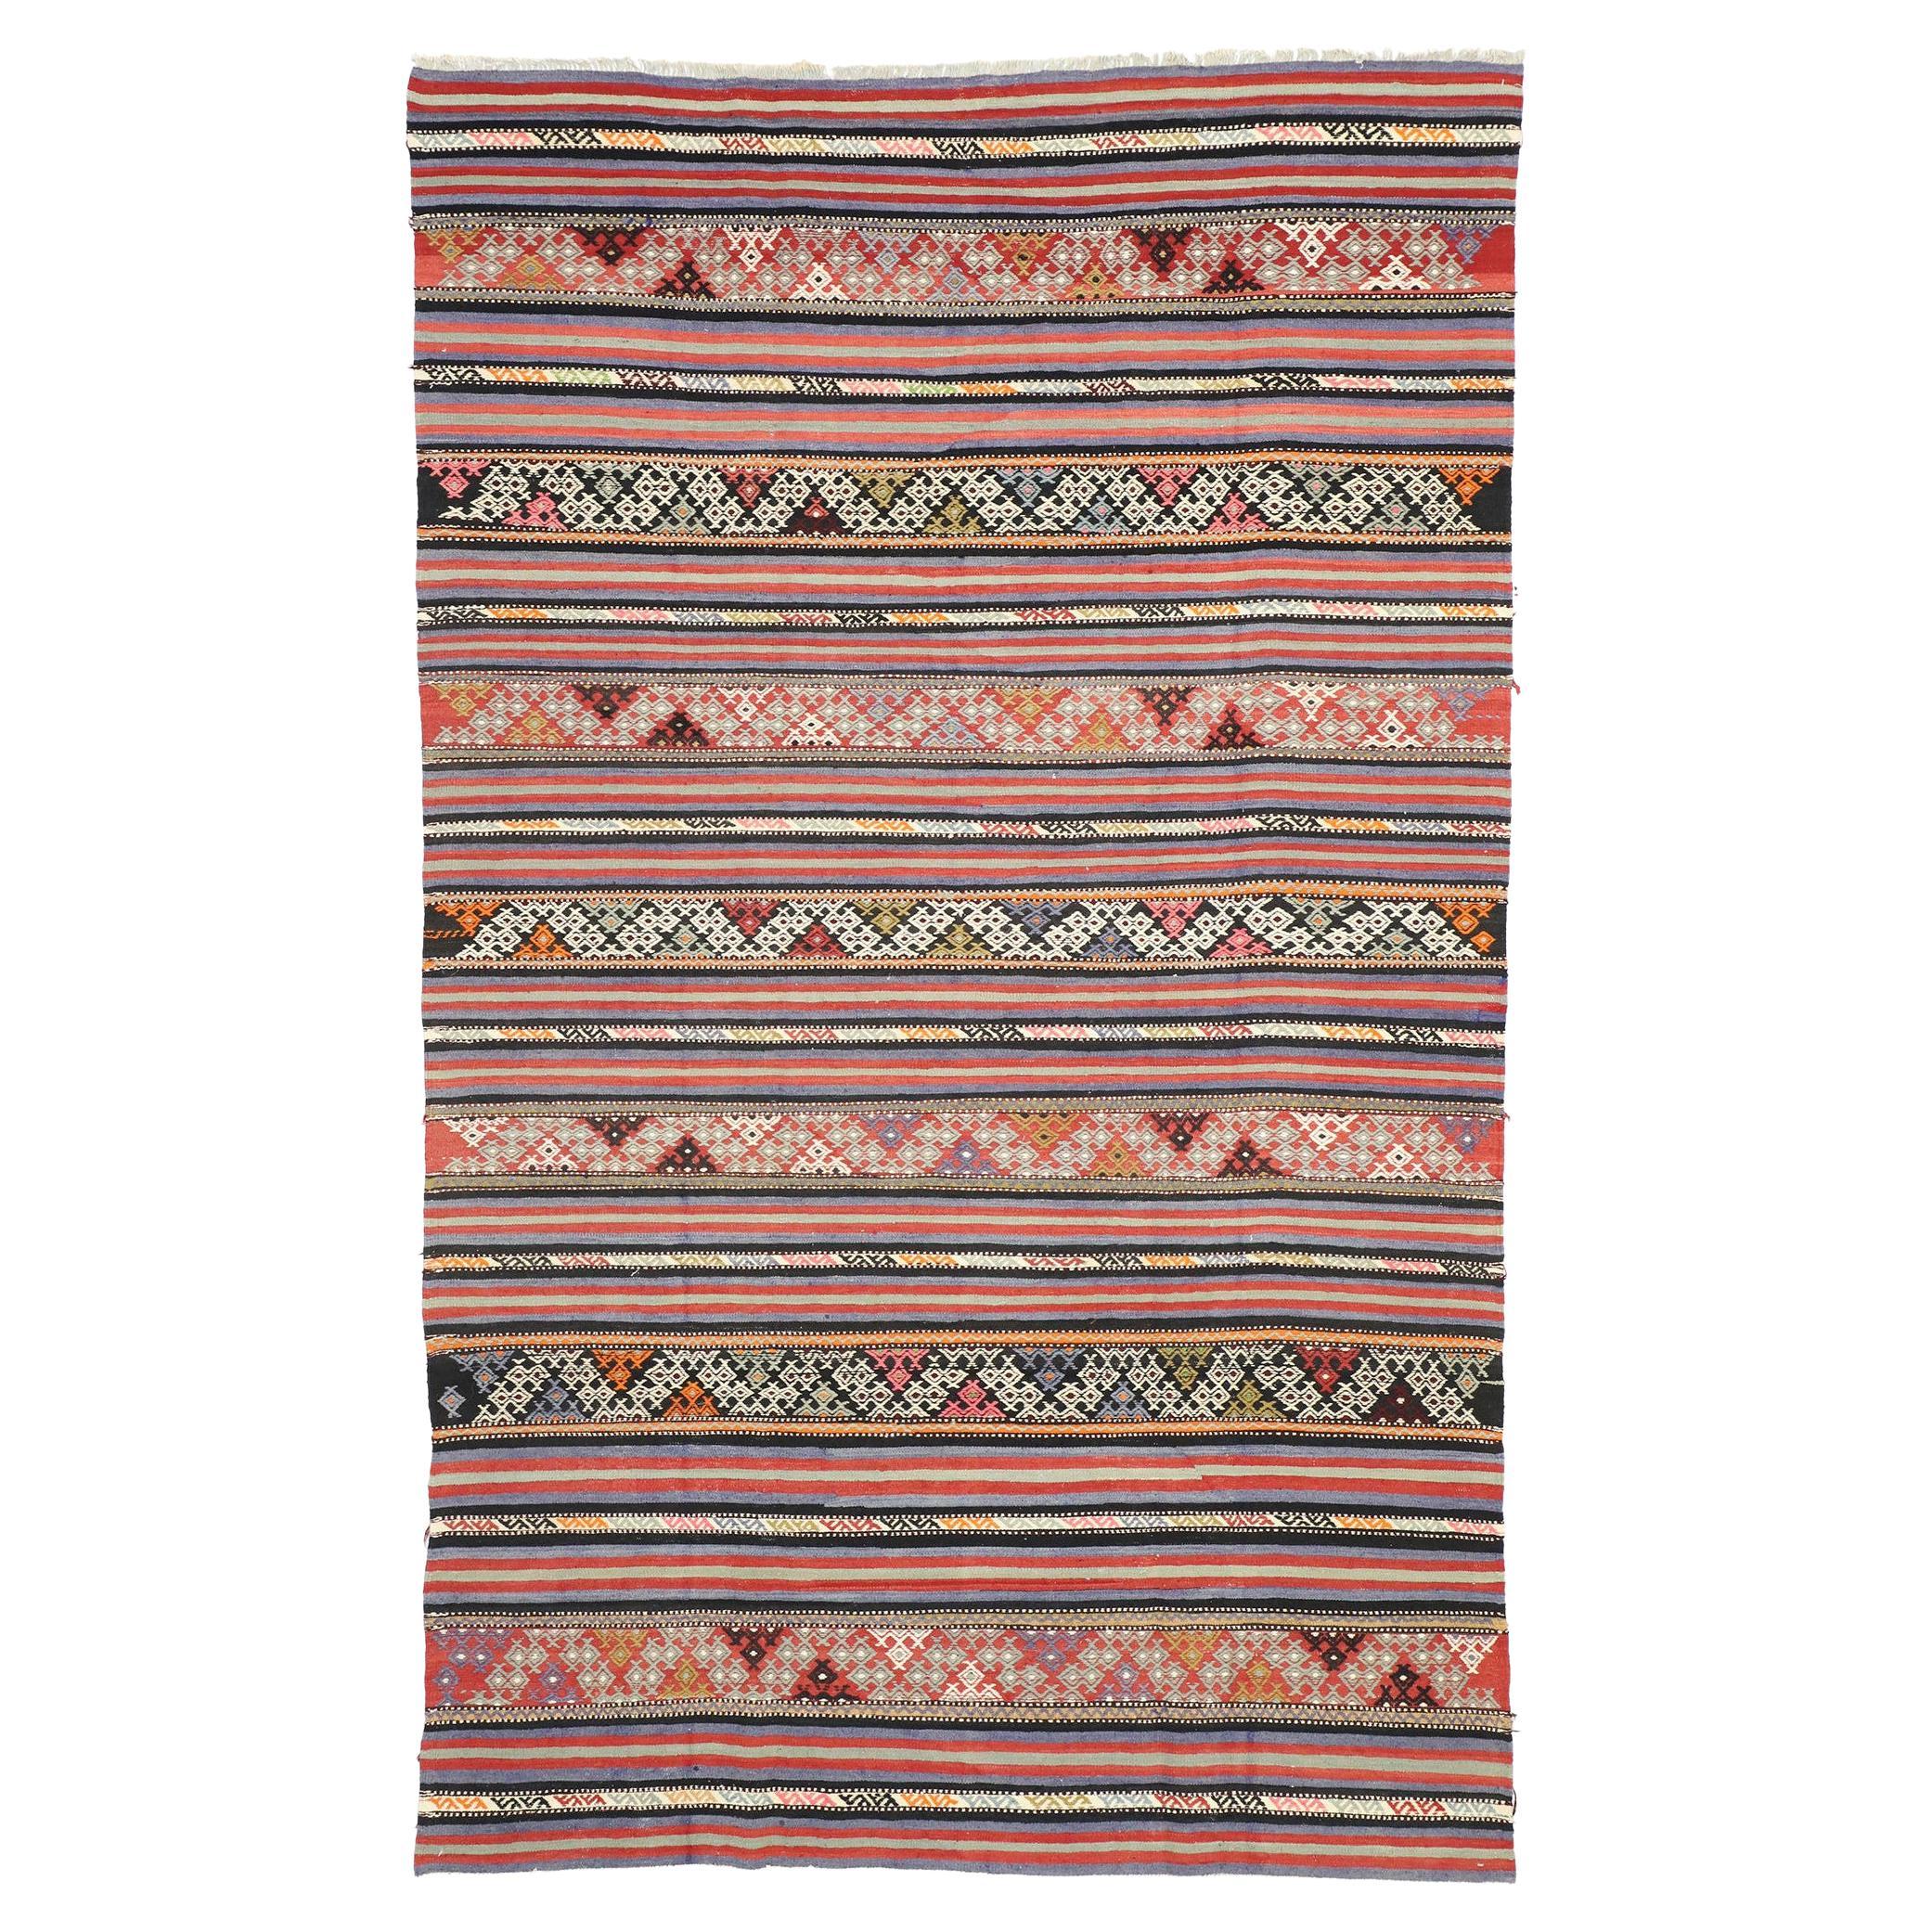 Vintage Turkish Striped Kilim Rug with Modern Boho Chic Tribal Style For Sale